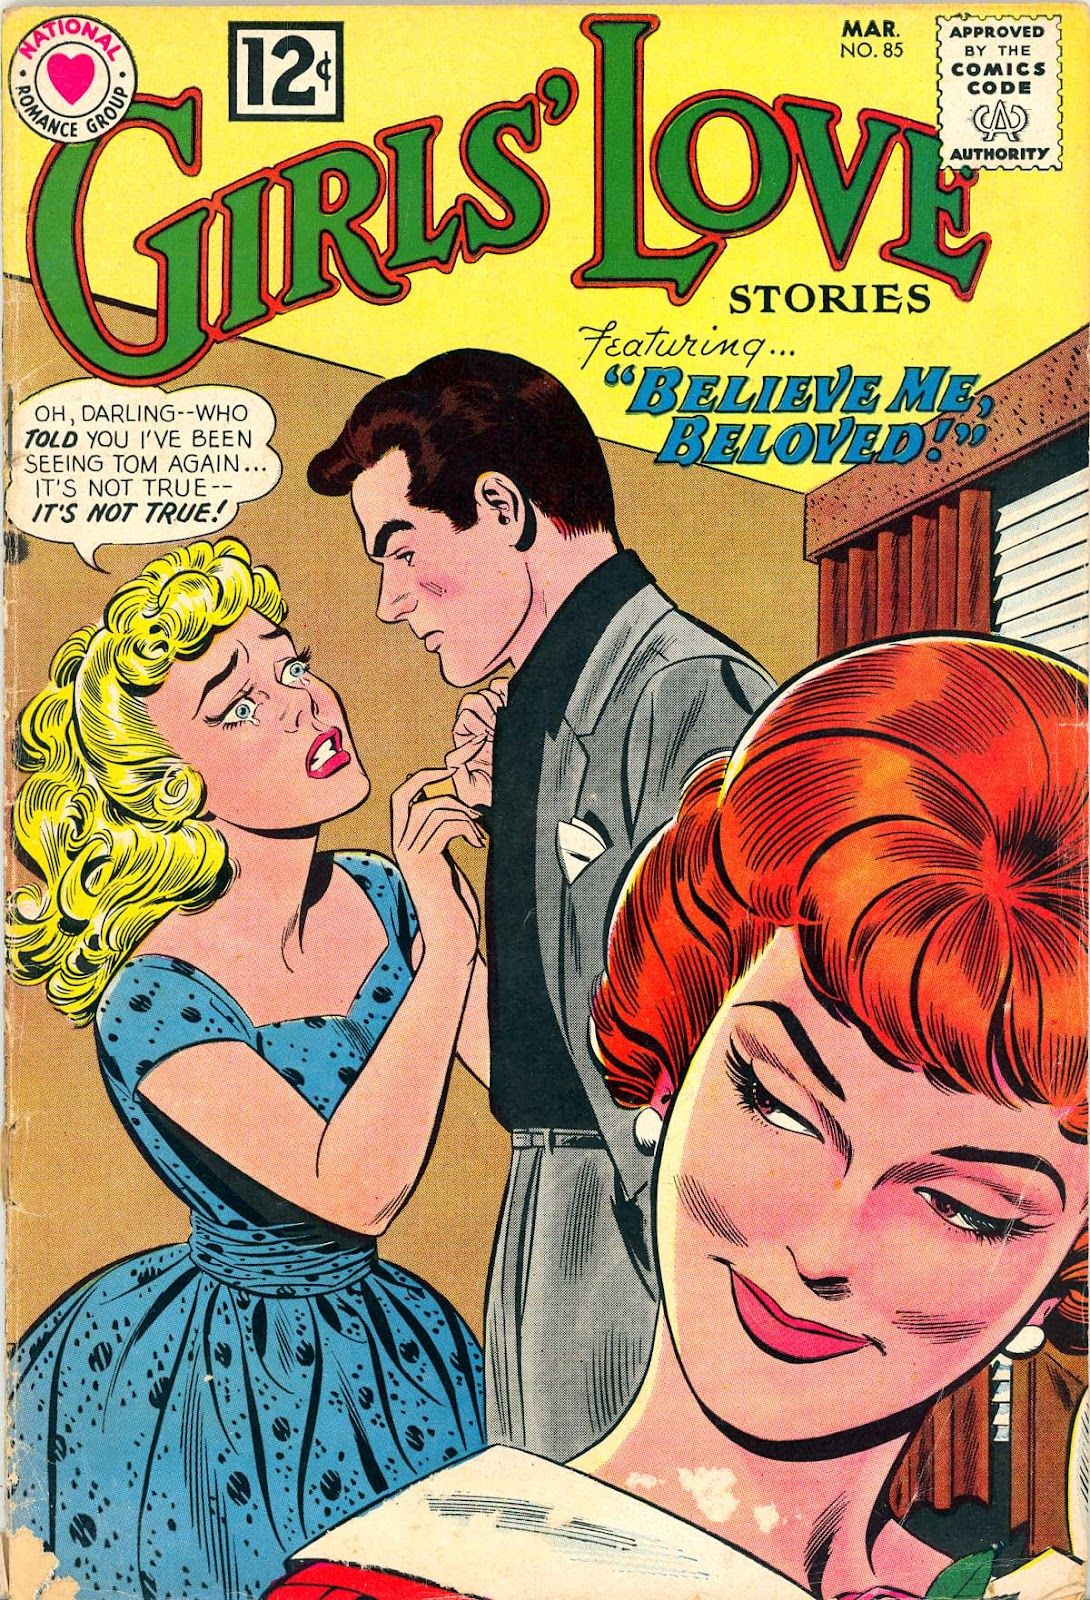 A romance comic book cover by John Romita